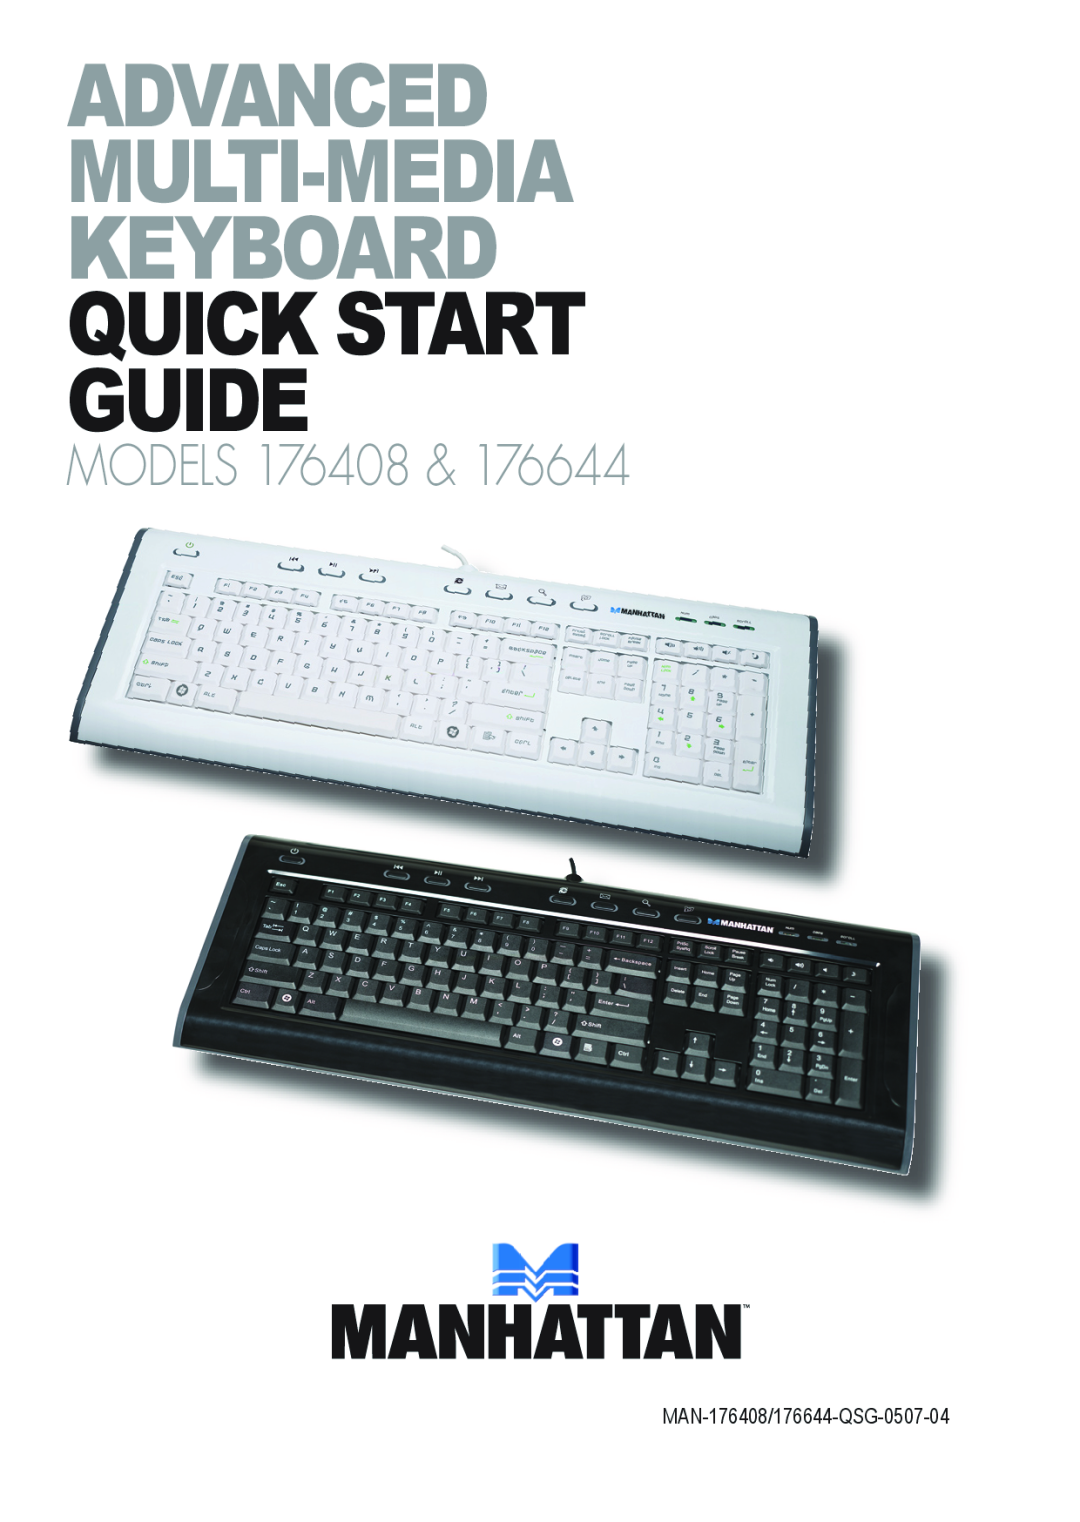 Manhattan Computer Products 176644, 176408 quick start advanced Multi-MediaKeyboard quick start guide, Models 